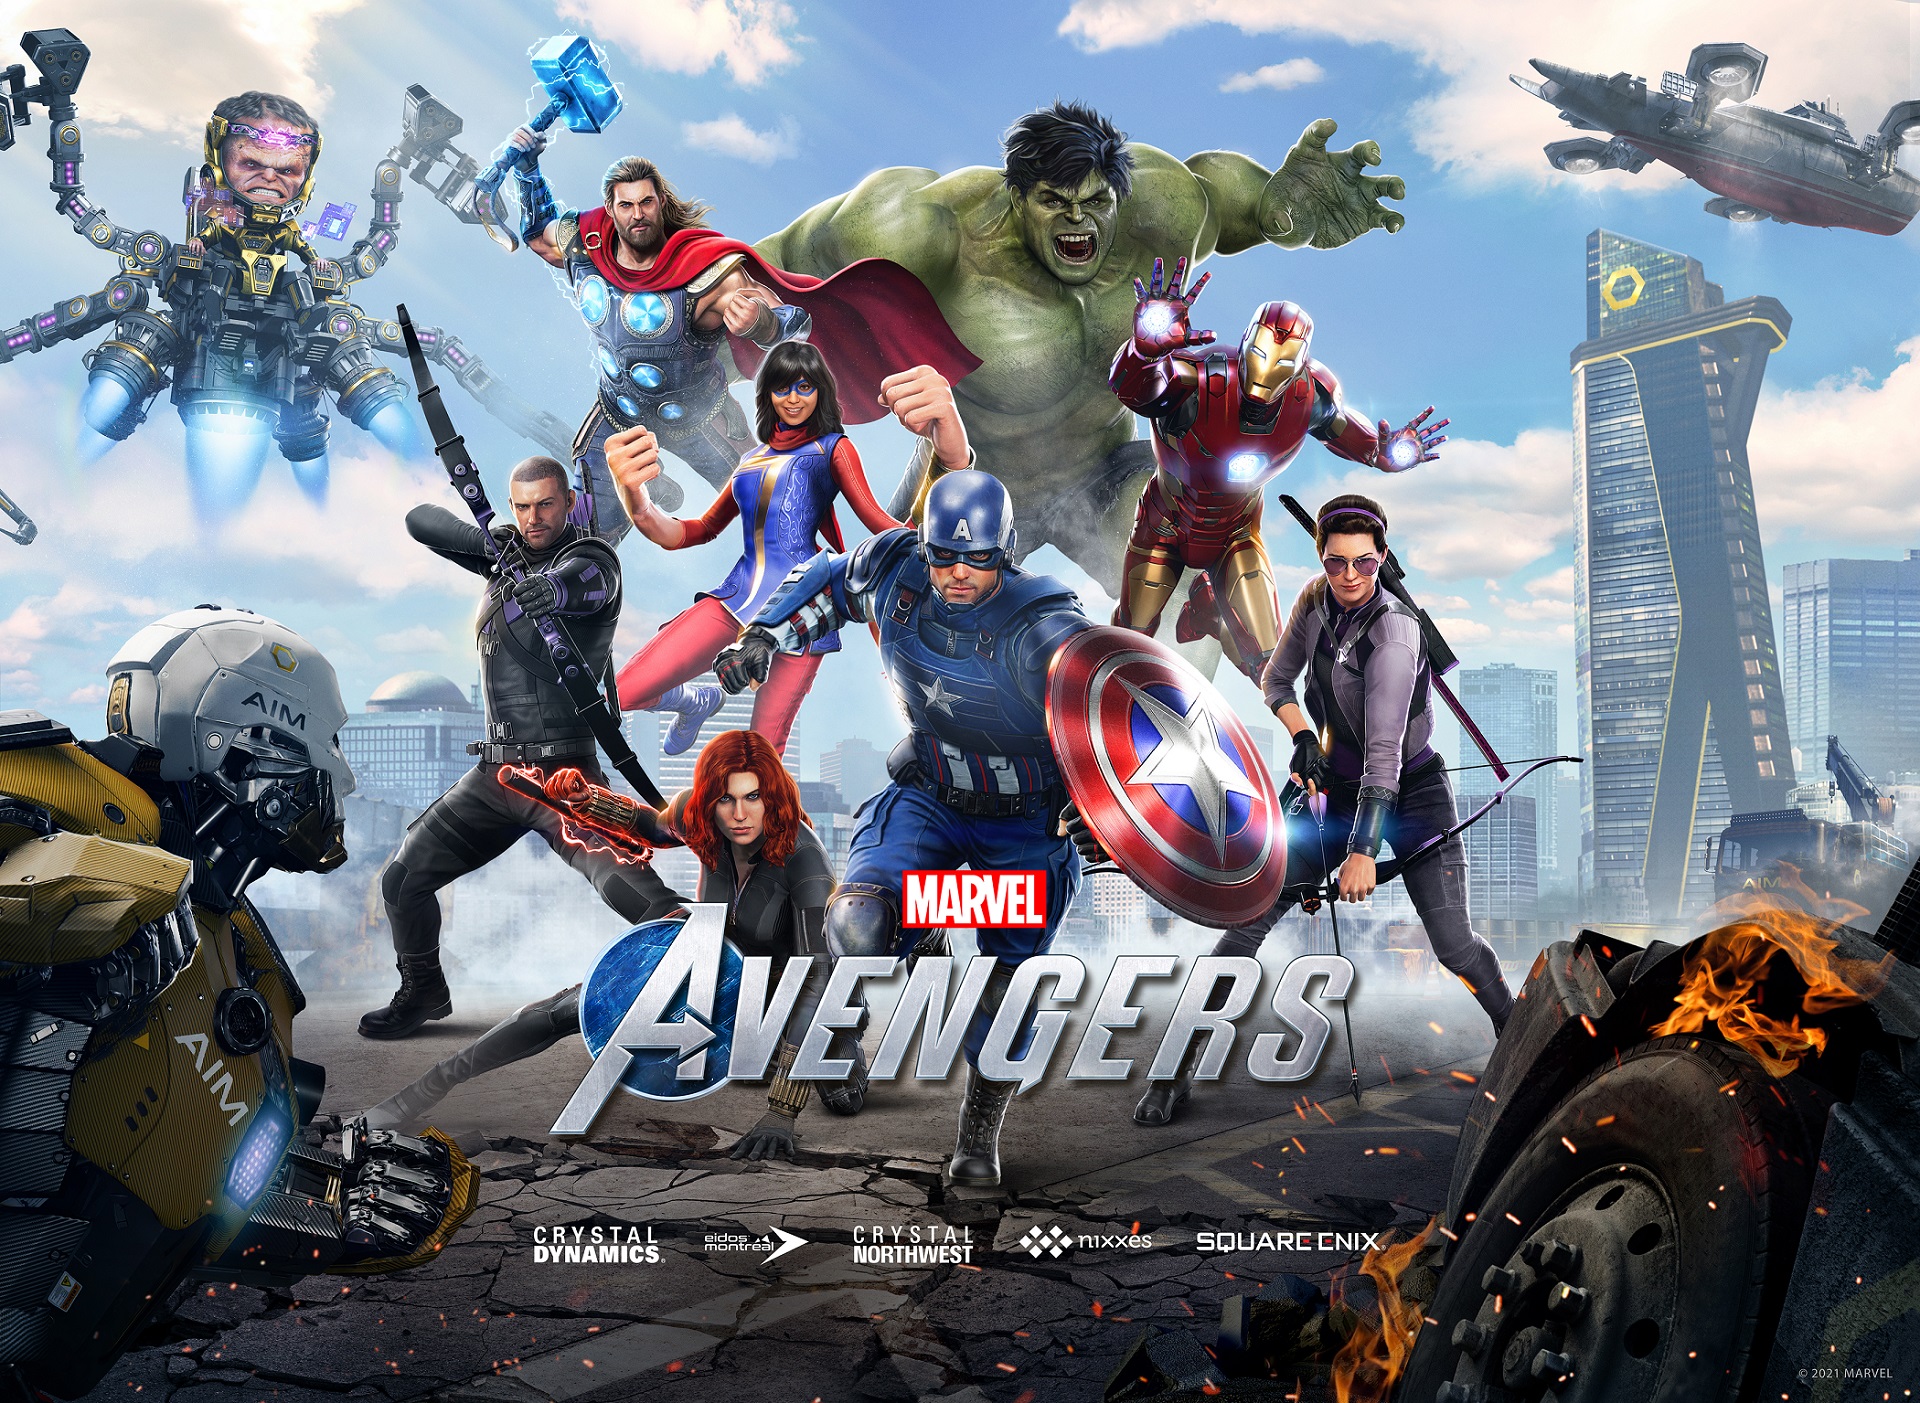 Marvel’s Avengers is 90% off before it leaves digital stores on Sept 30